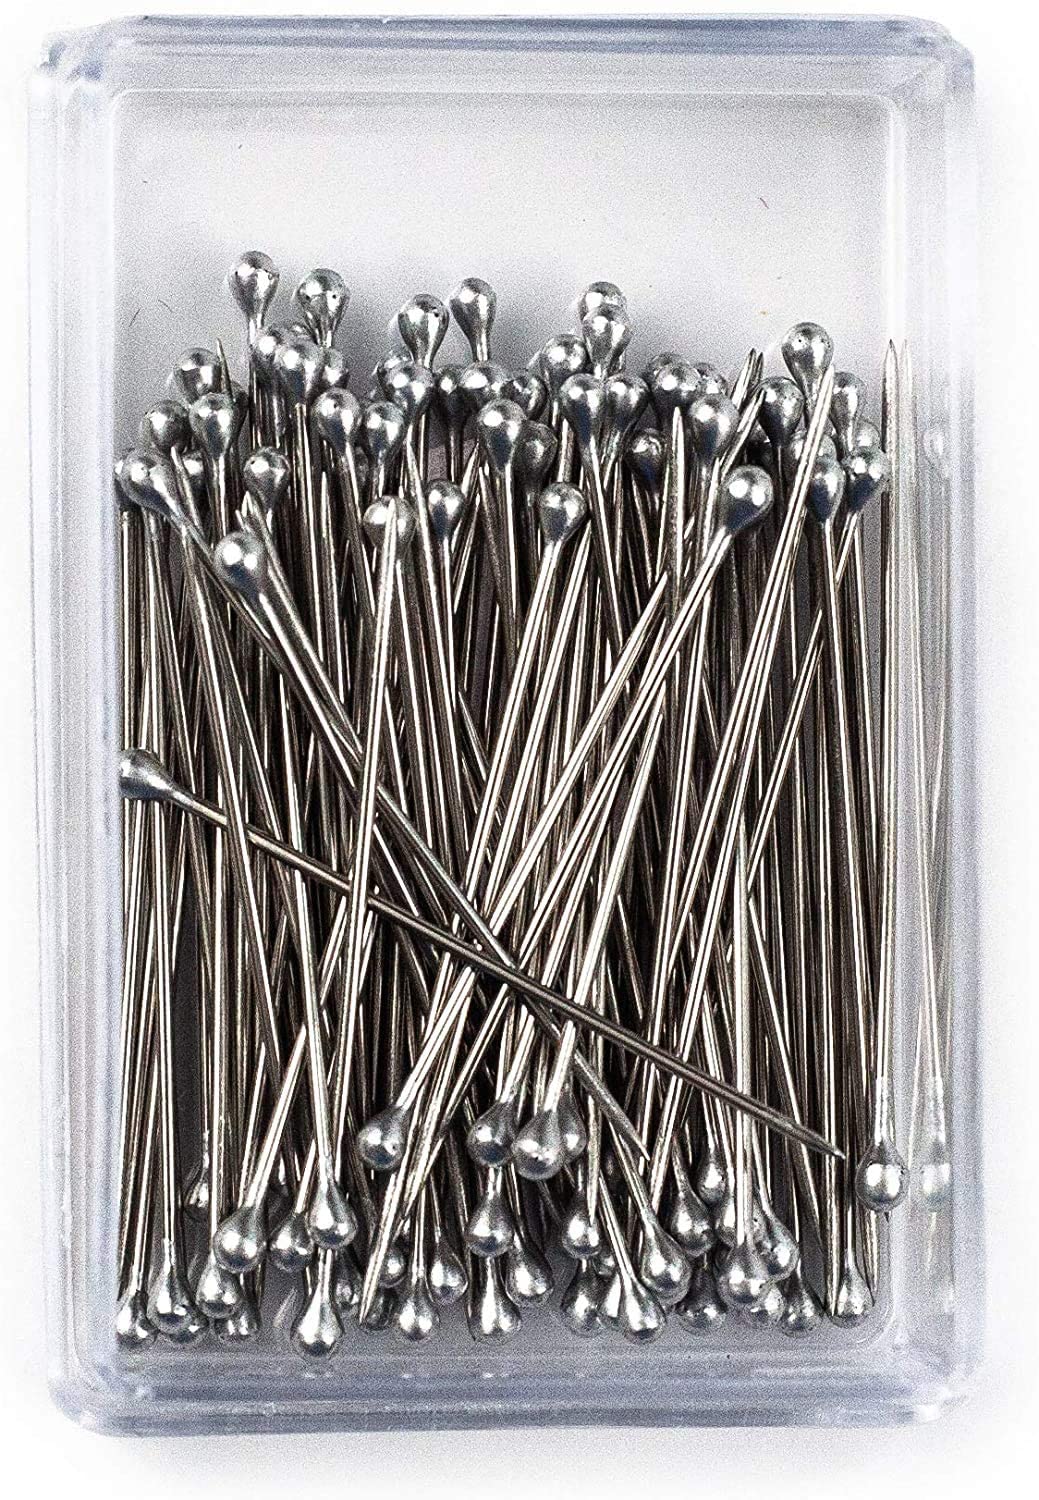 Enamel Head Pin. Colored, Black, White or Silver Color Head Pin (100 pcs)